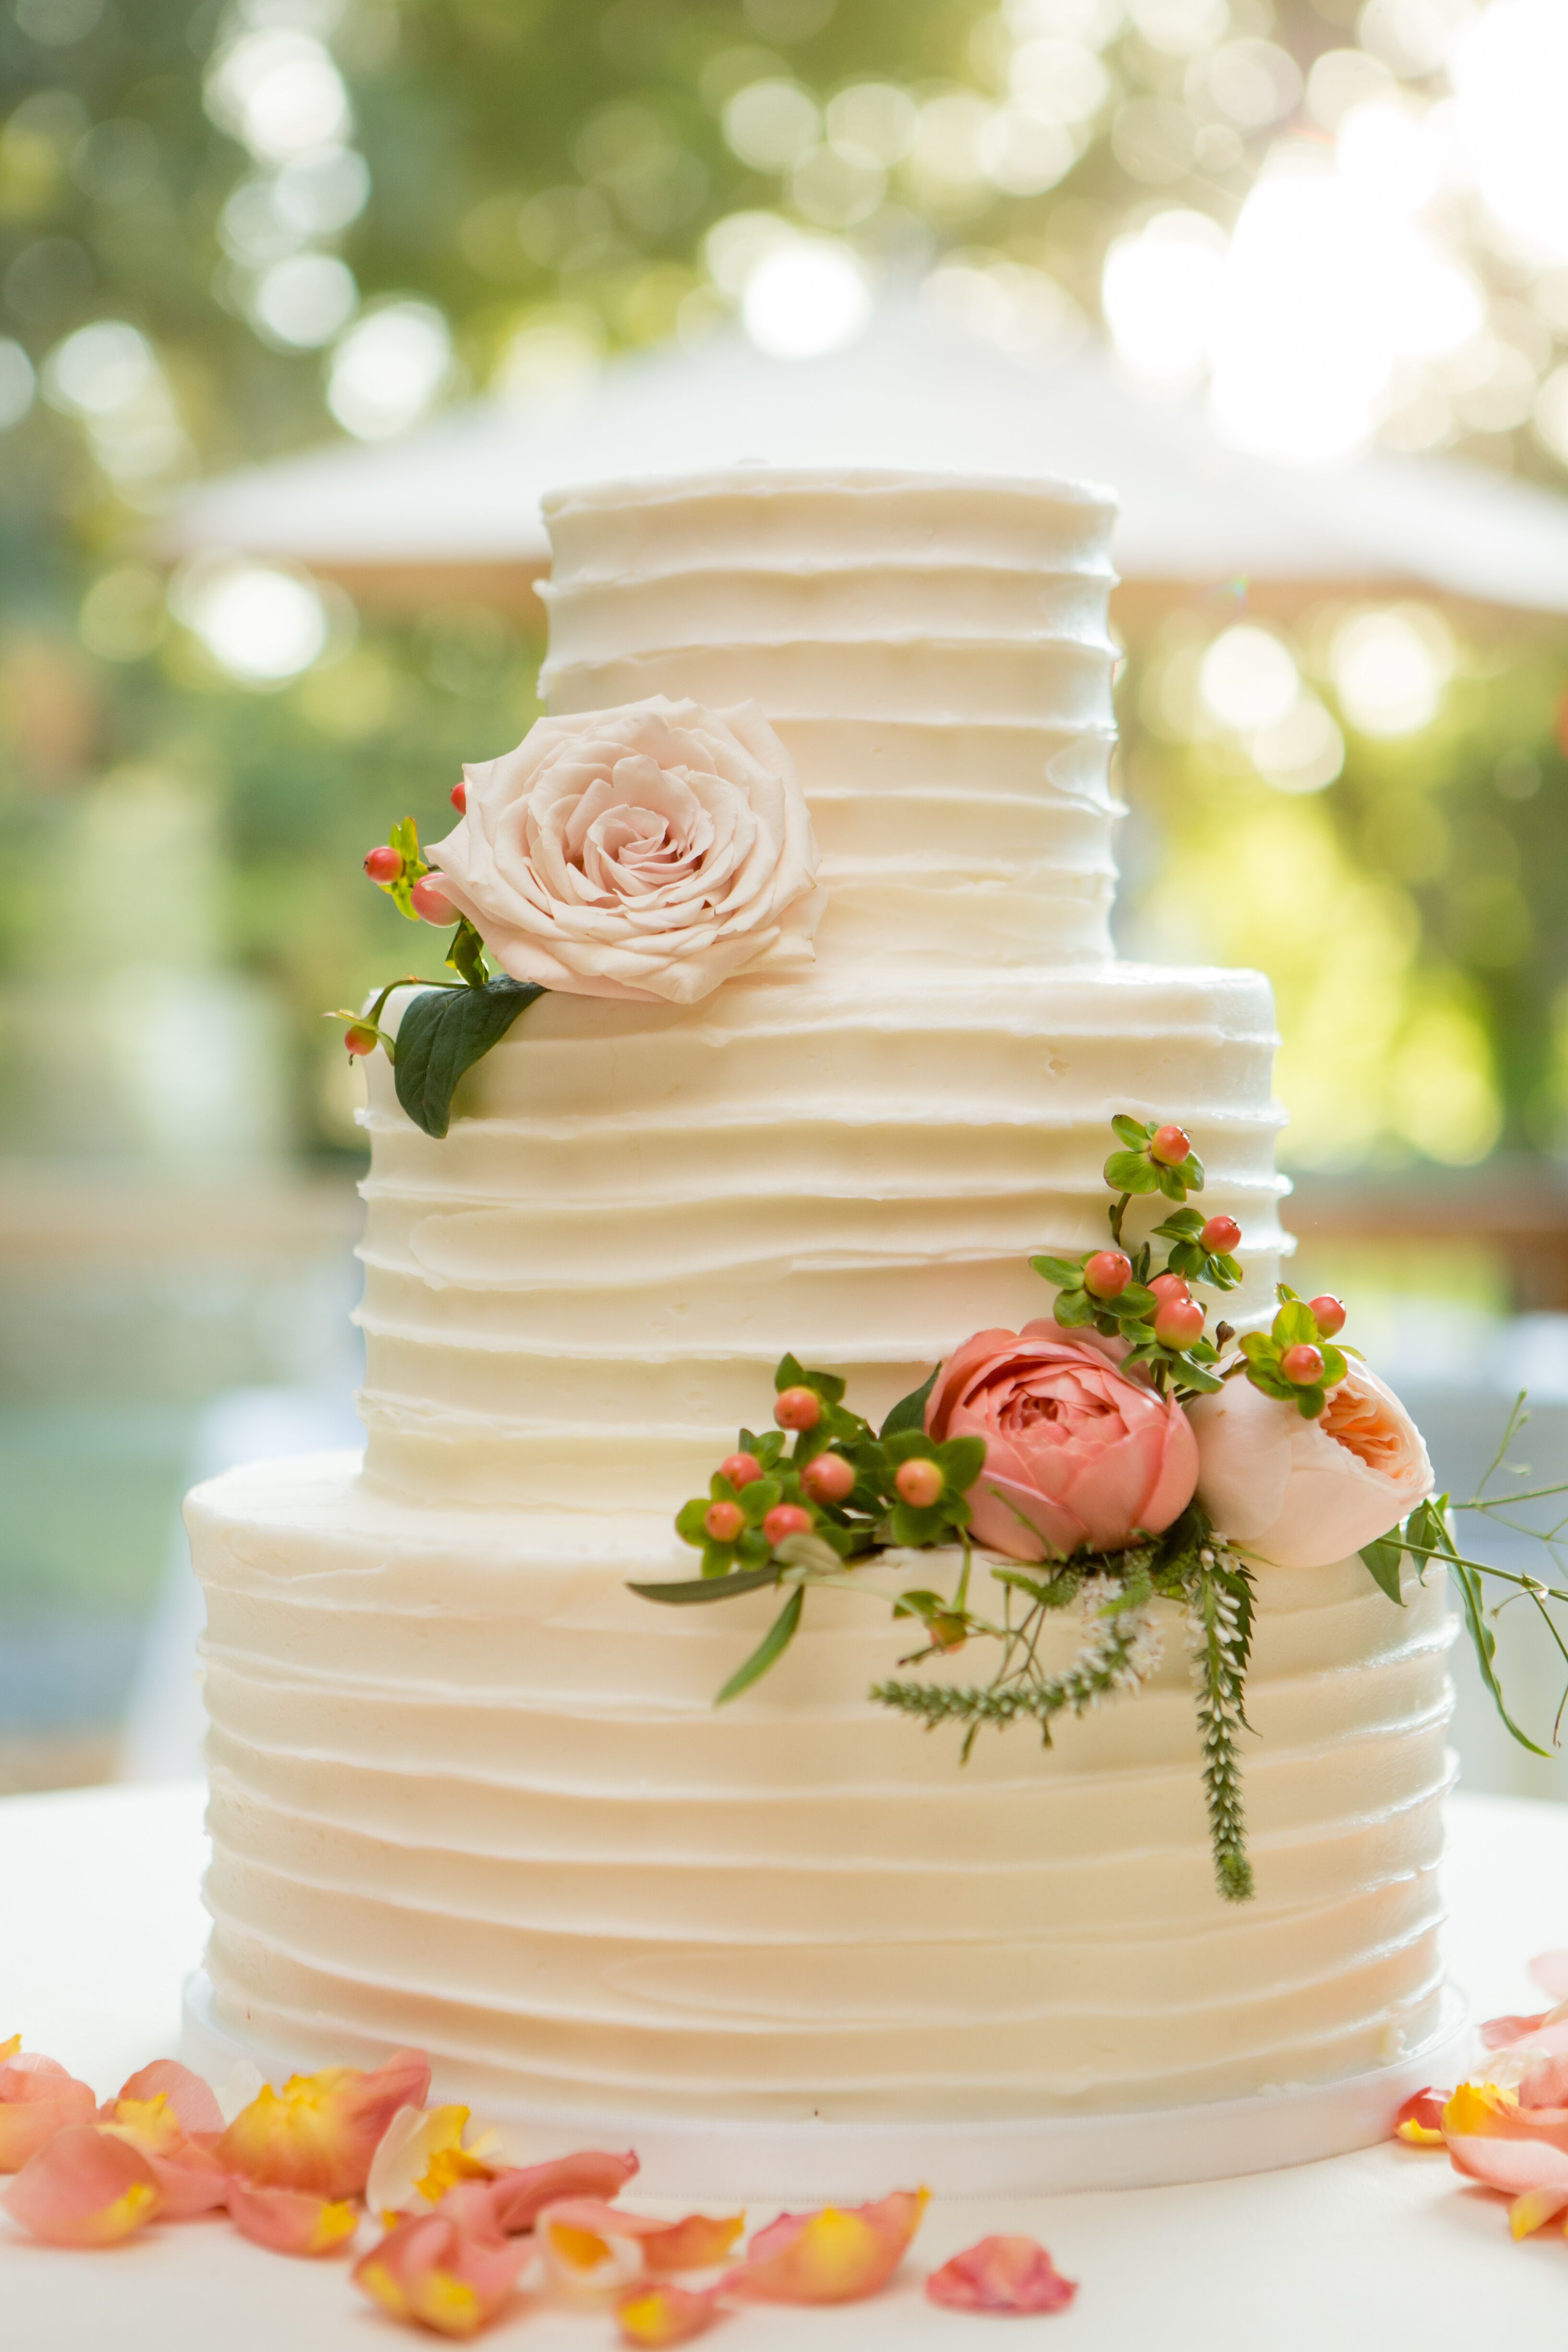 Picturesque Simple Wedding Cakes